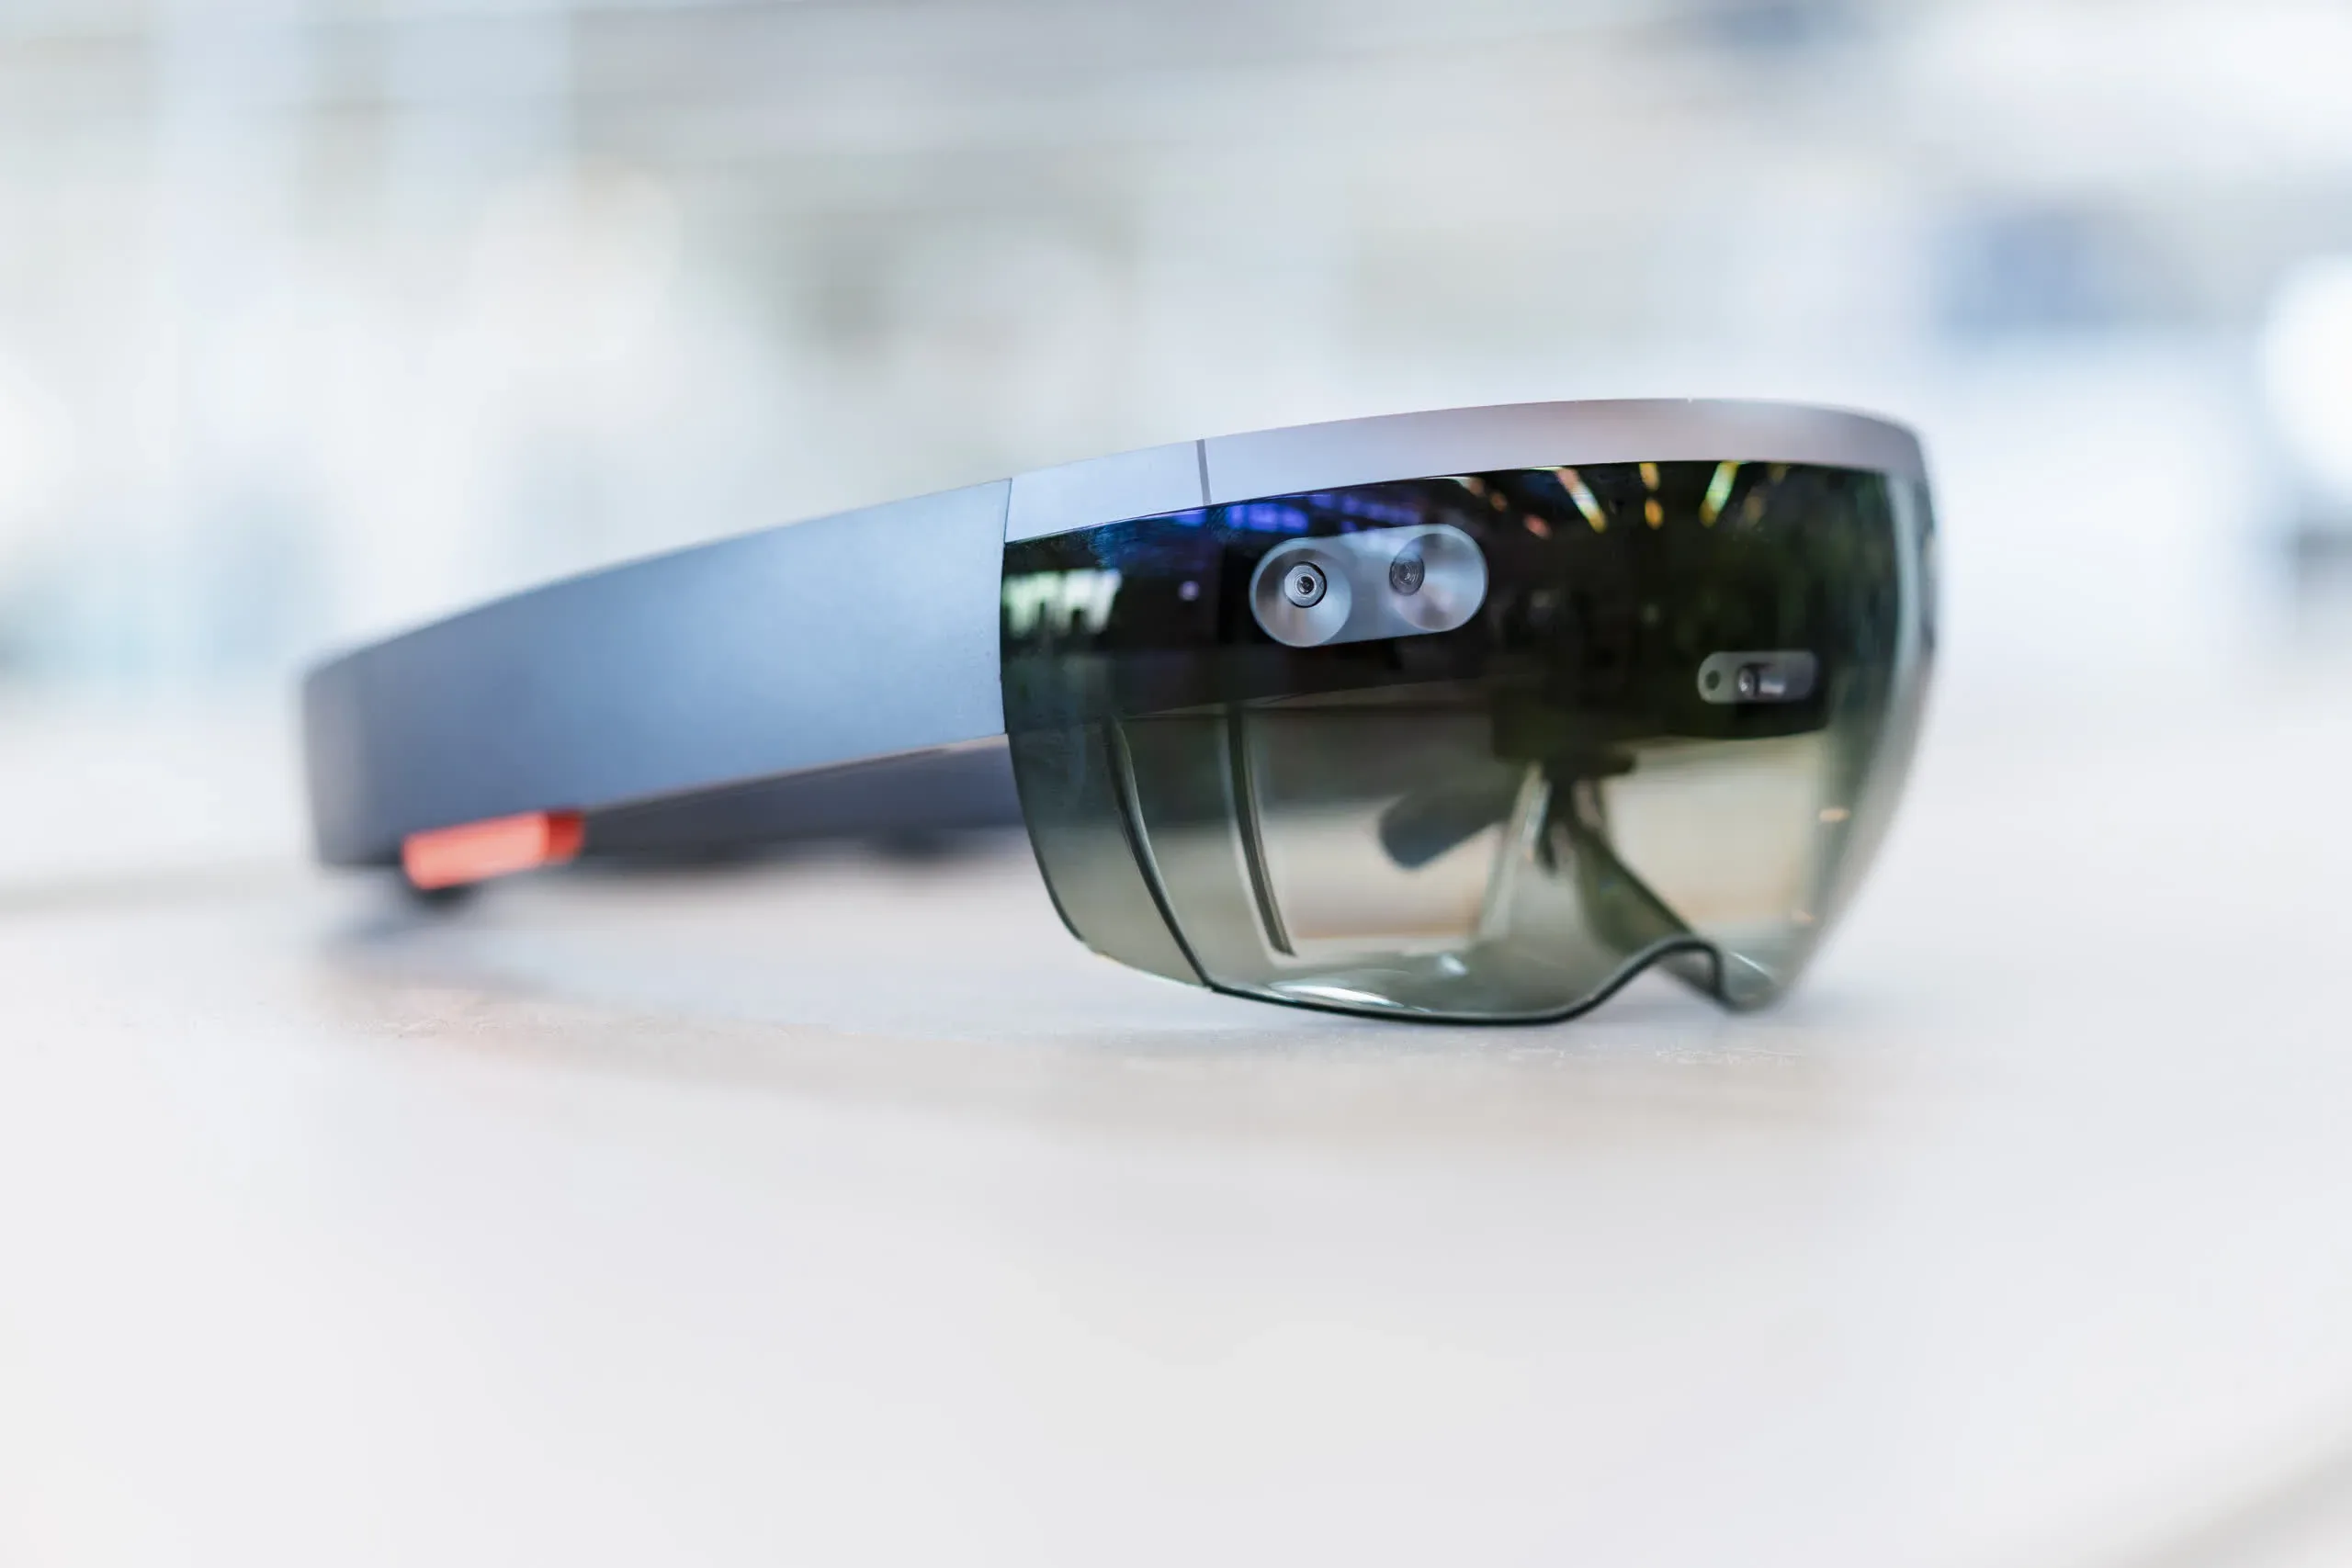 resize augmented reality eyeglasses stuttgart germany 2022 12 16 22 33 50 utc jpg webp